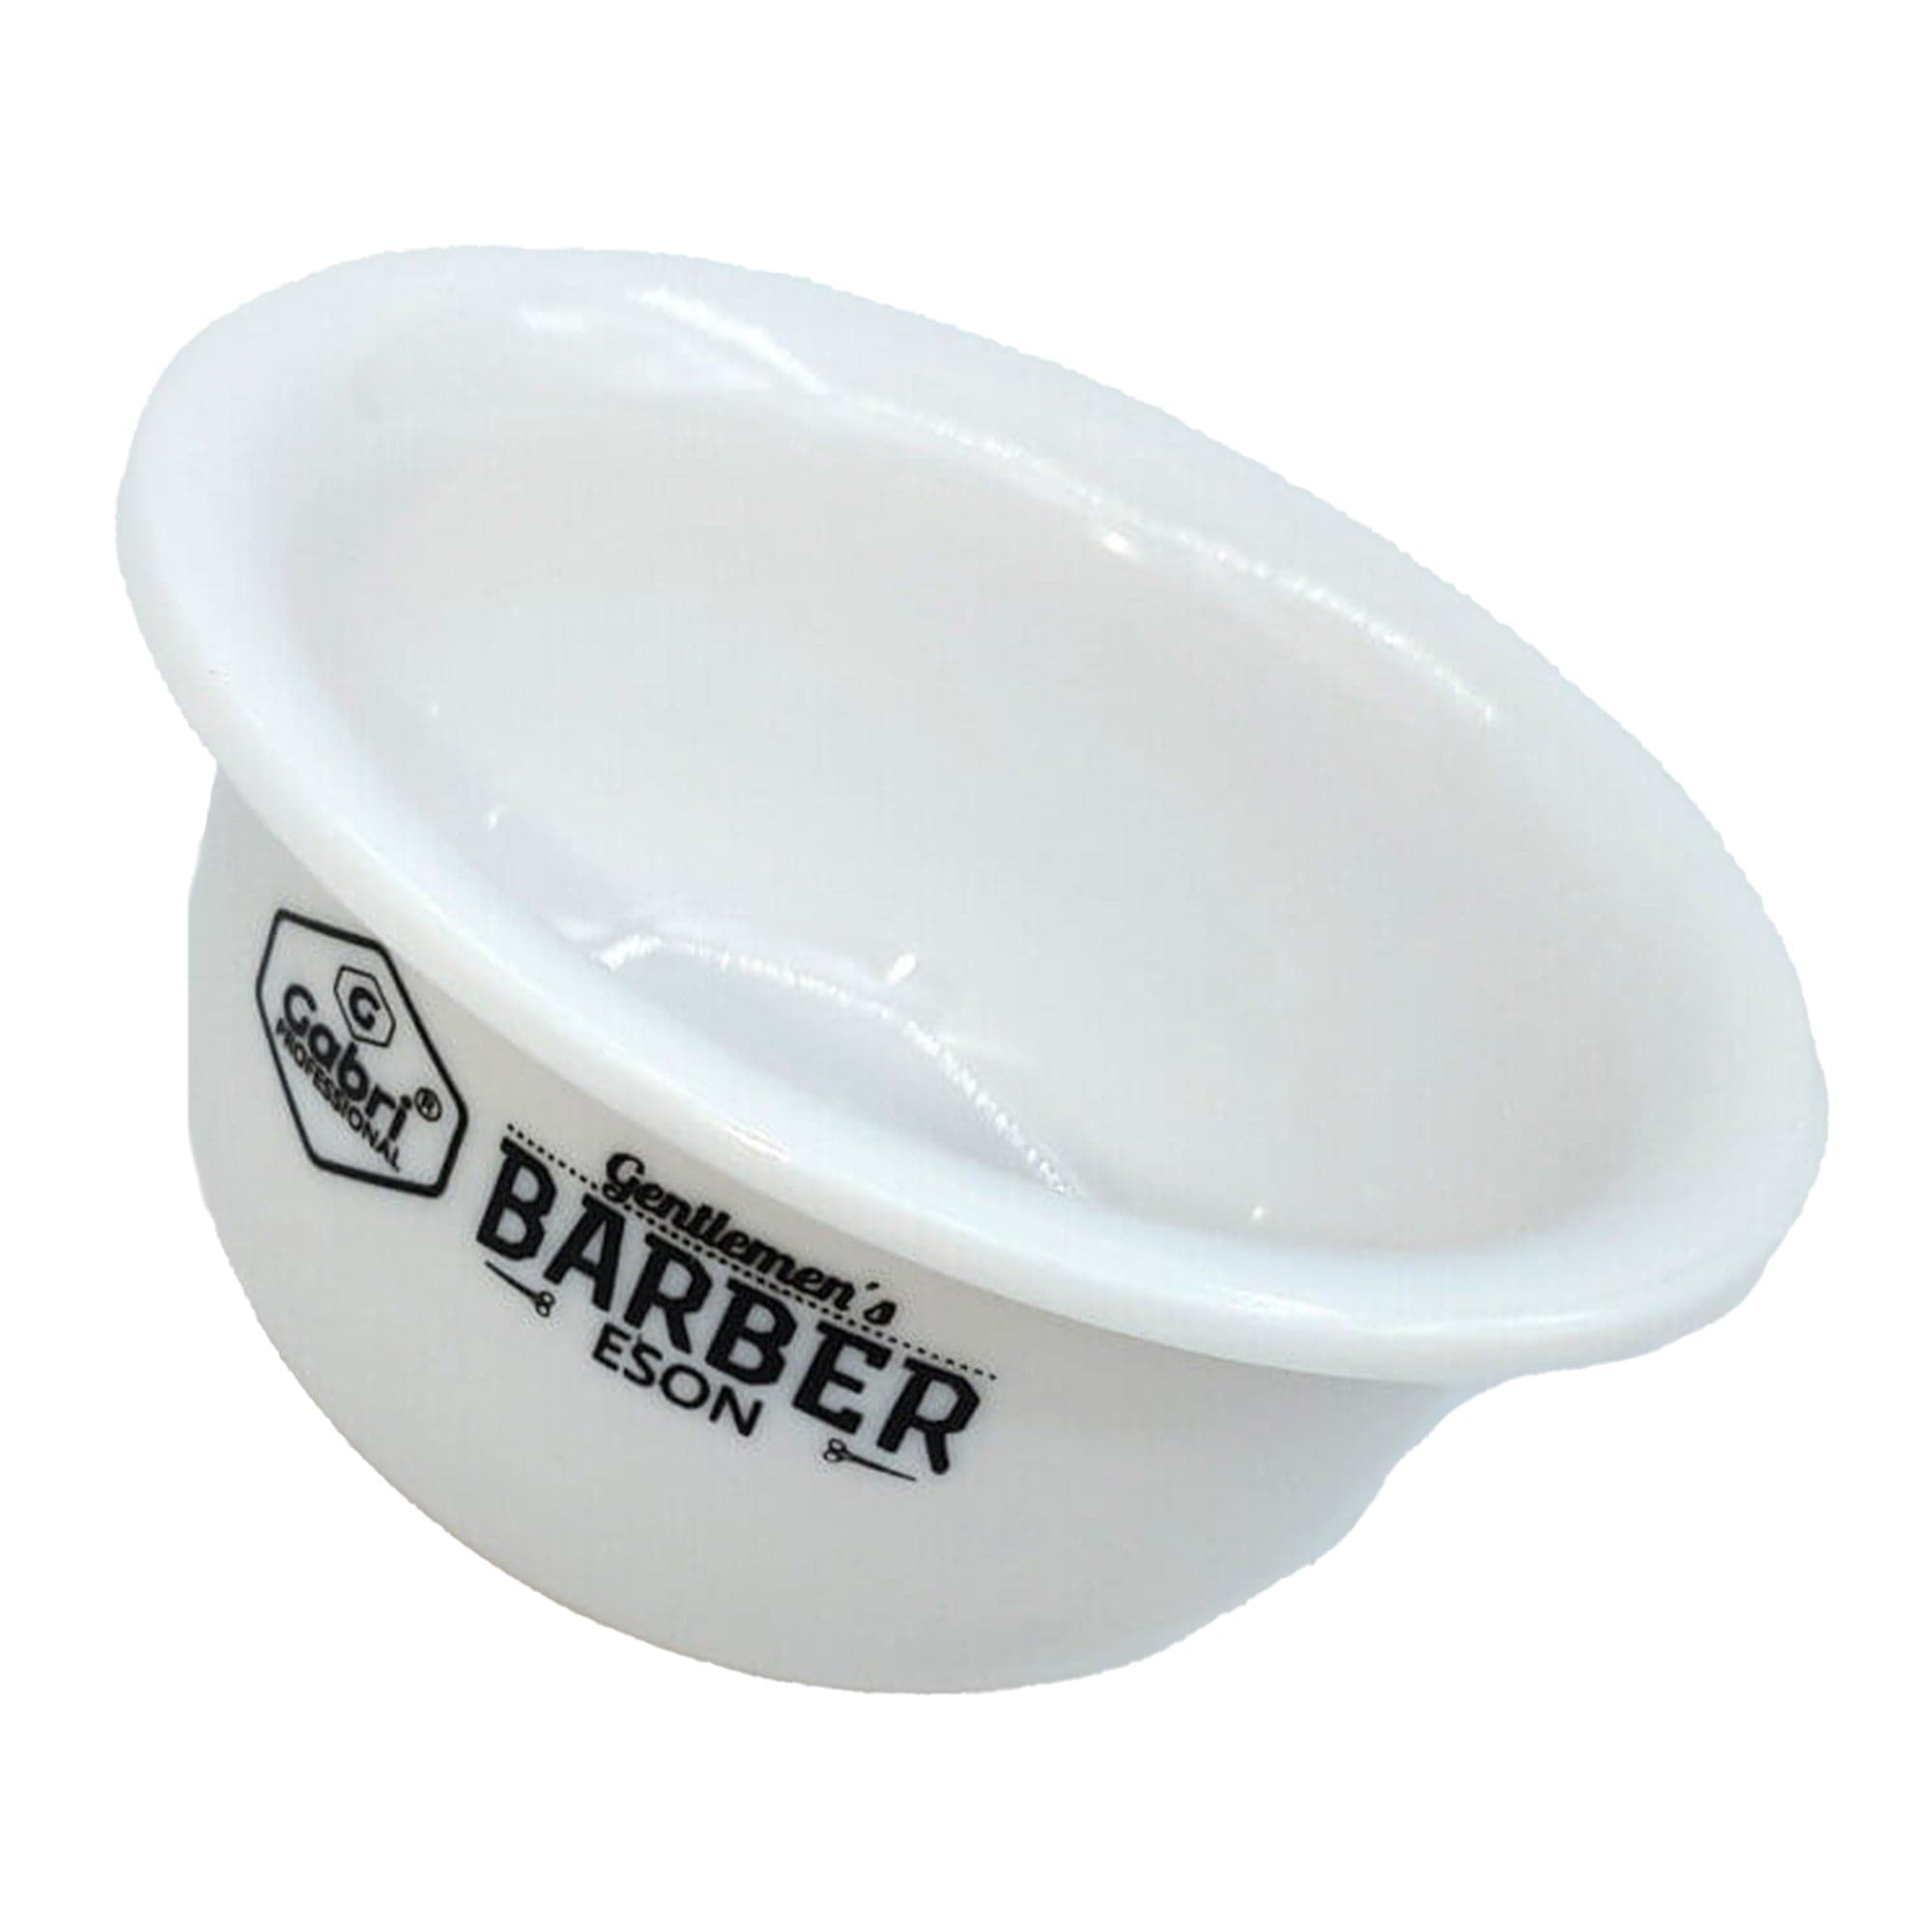 Gabri - Shaving Bowl 4.5x9cm (White)